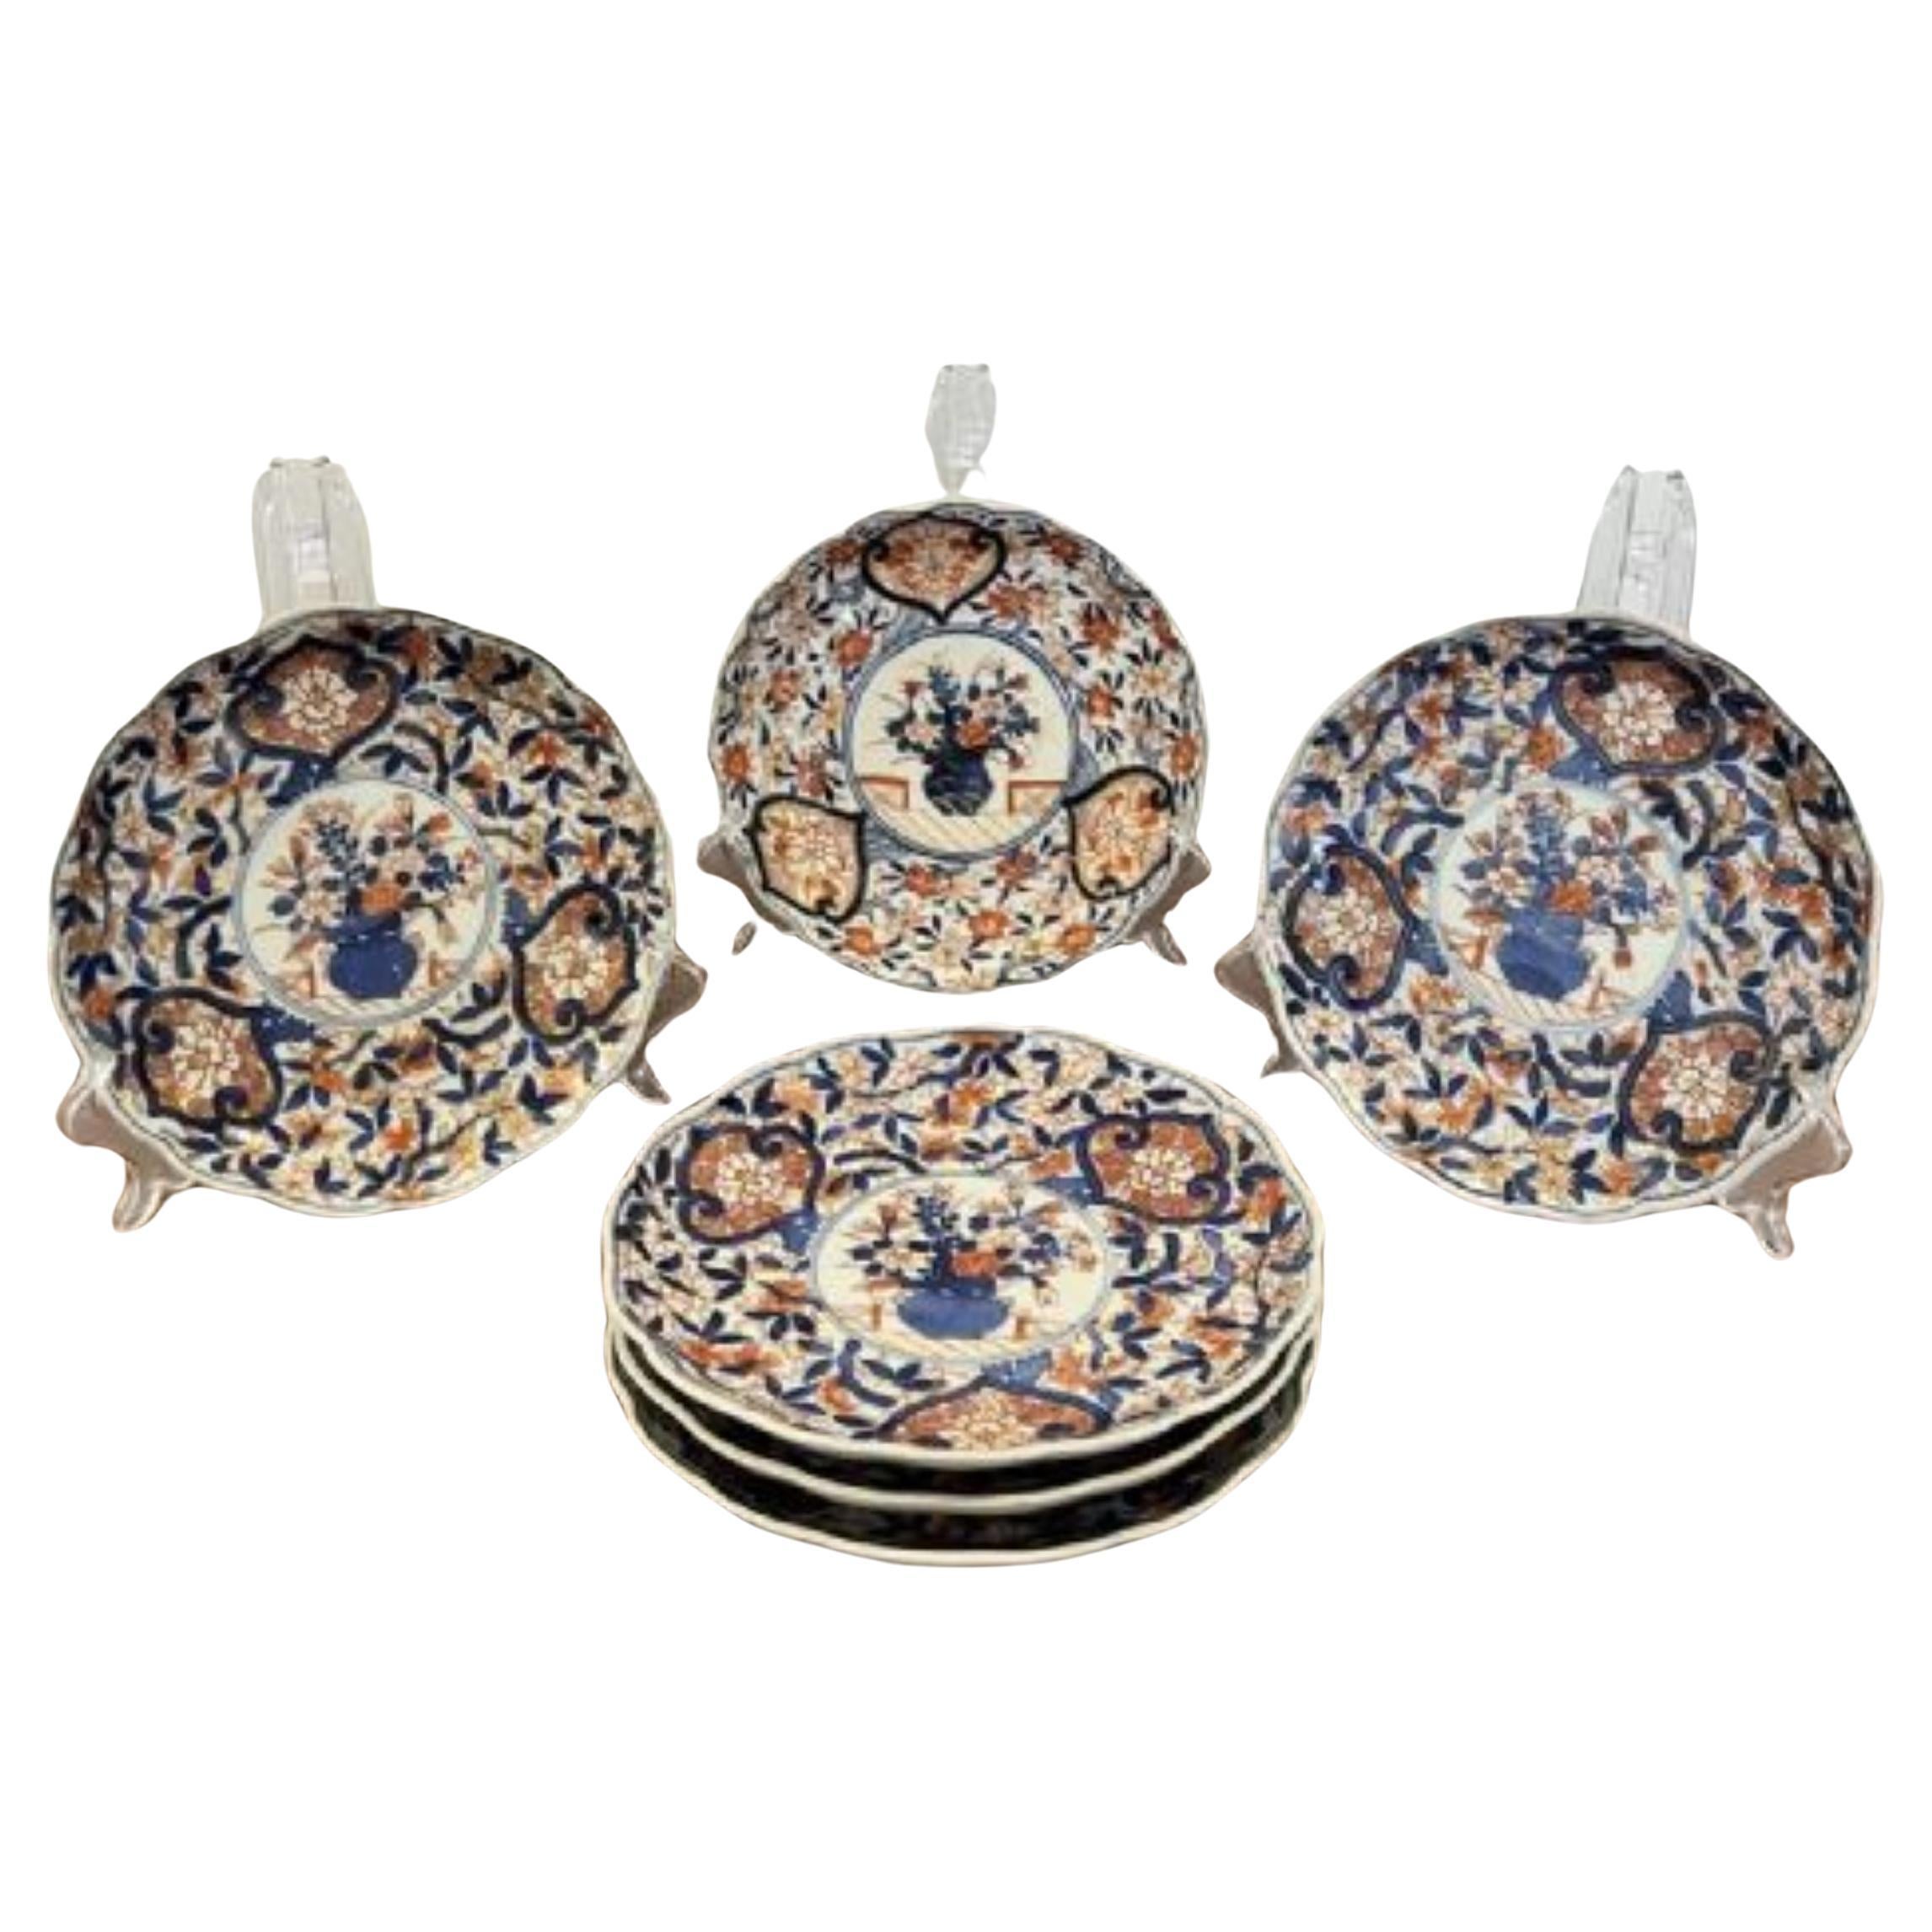 Unusual set of six antique Japanese quality Imari plates